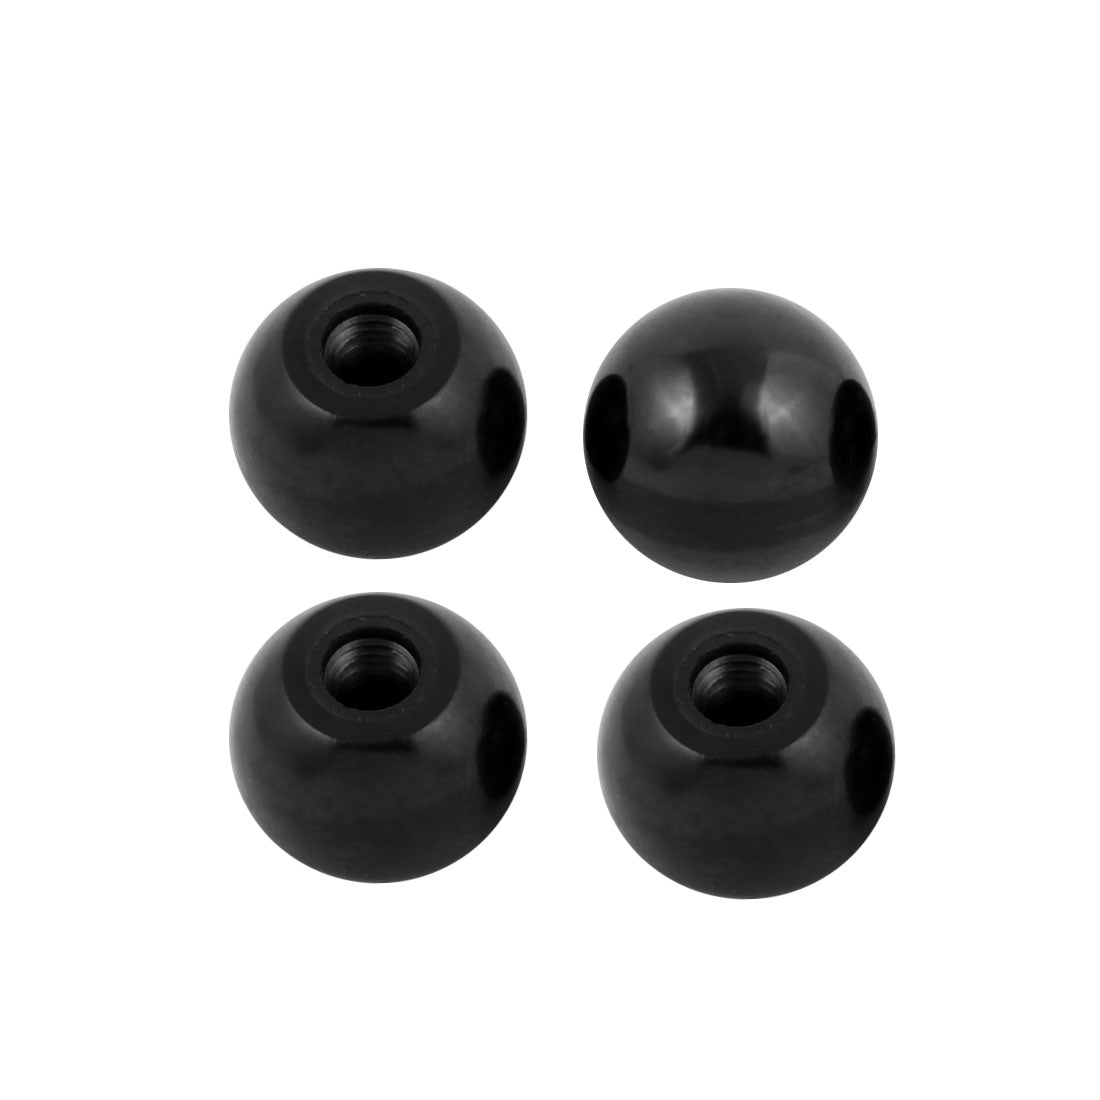 uxcell Uxcell 4Pcs Black Plastic Round Handle Ball Knob M10 Threaded 35mm Dia Machine Tools